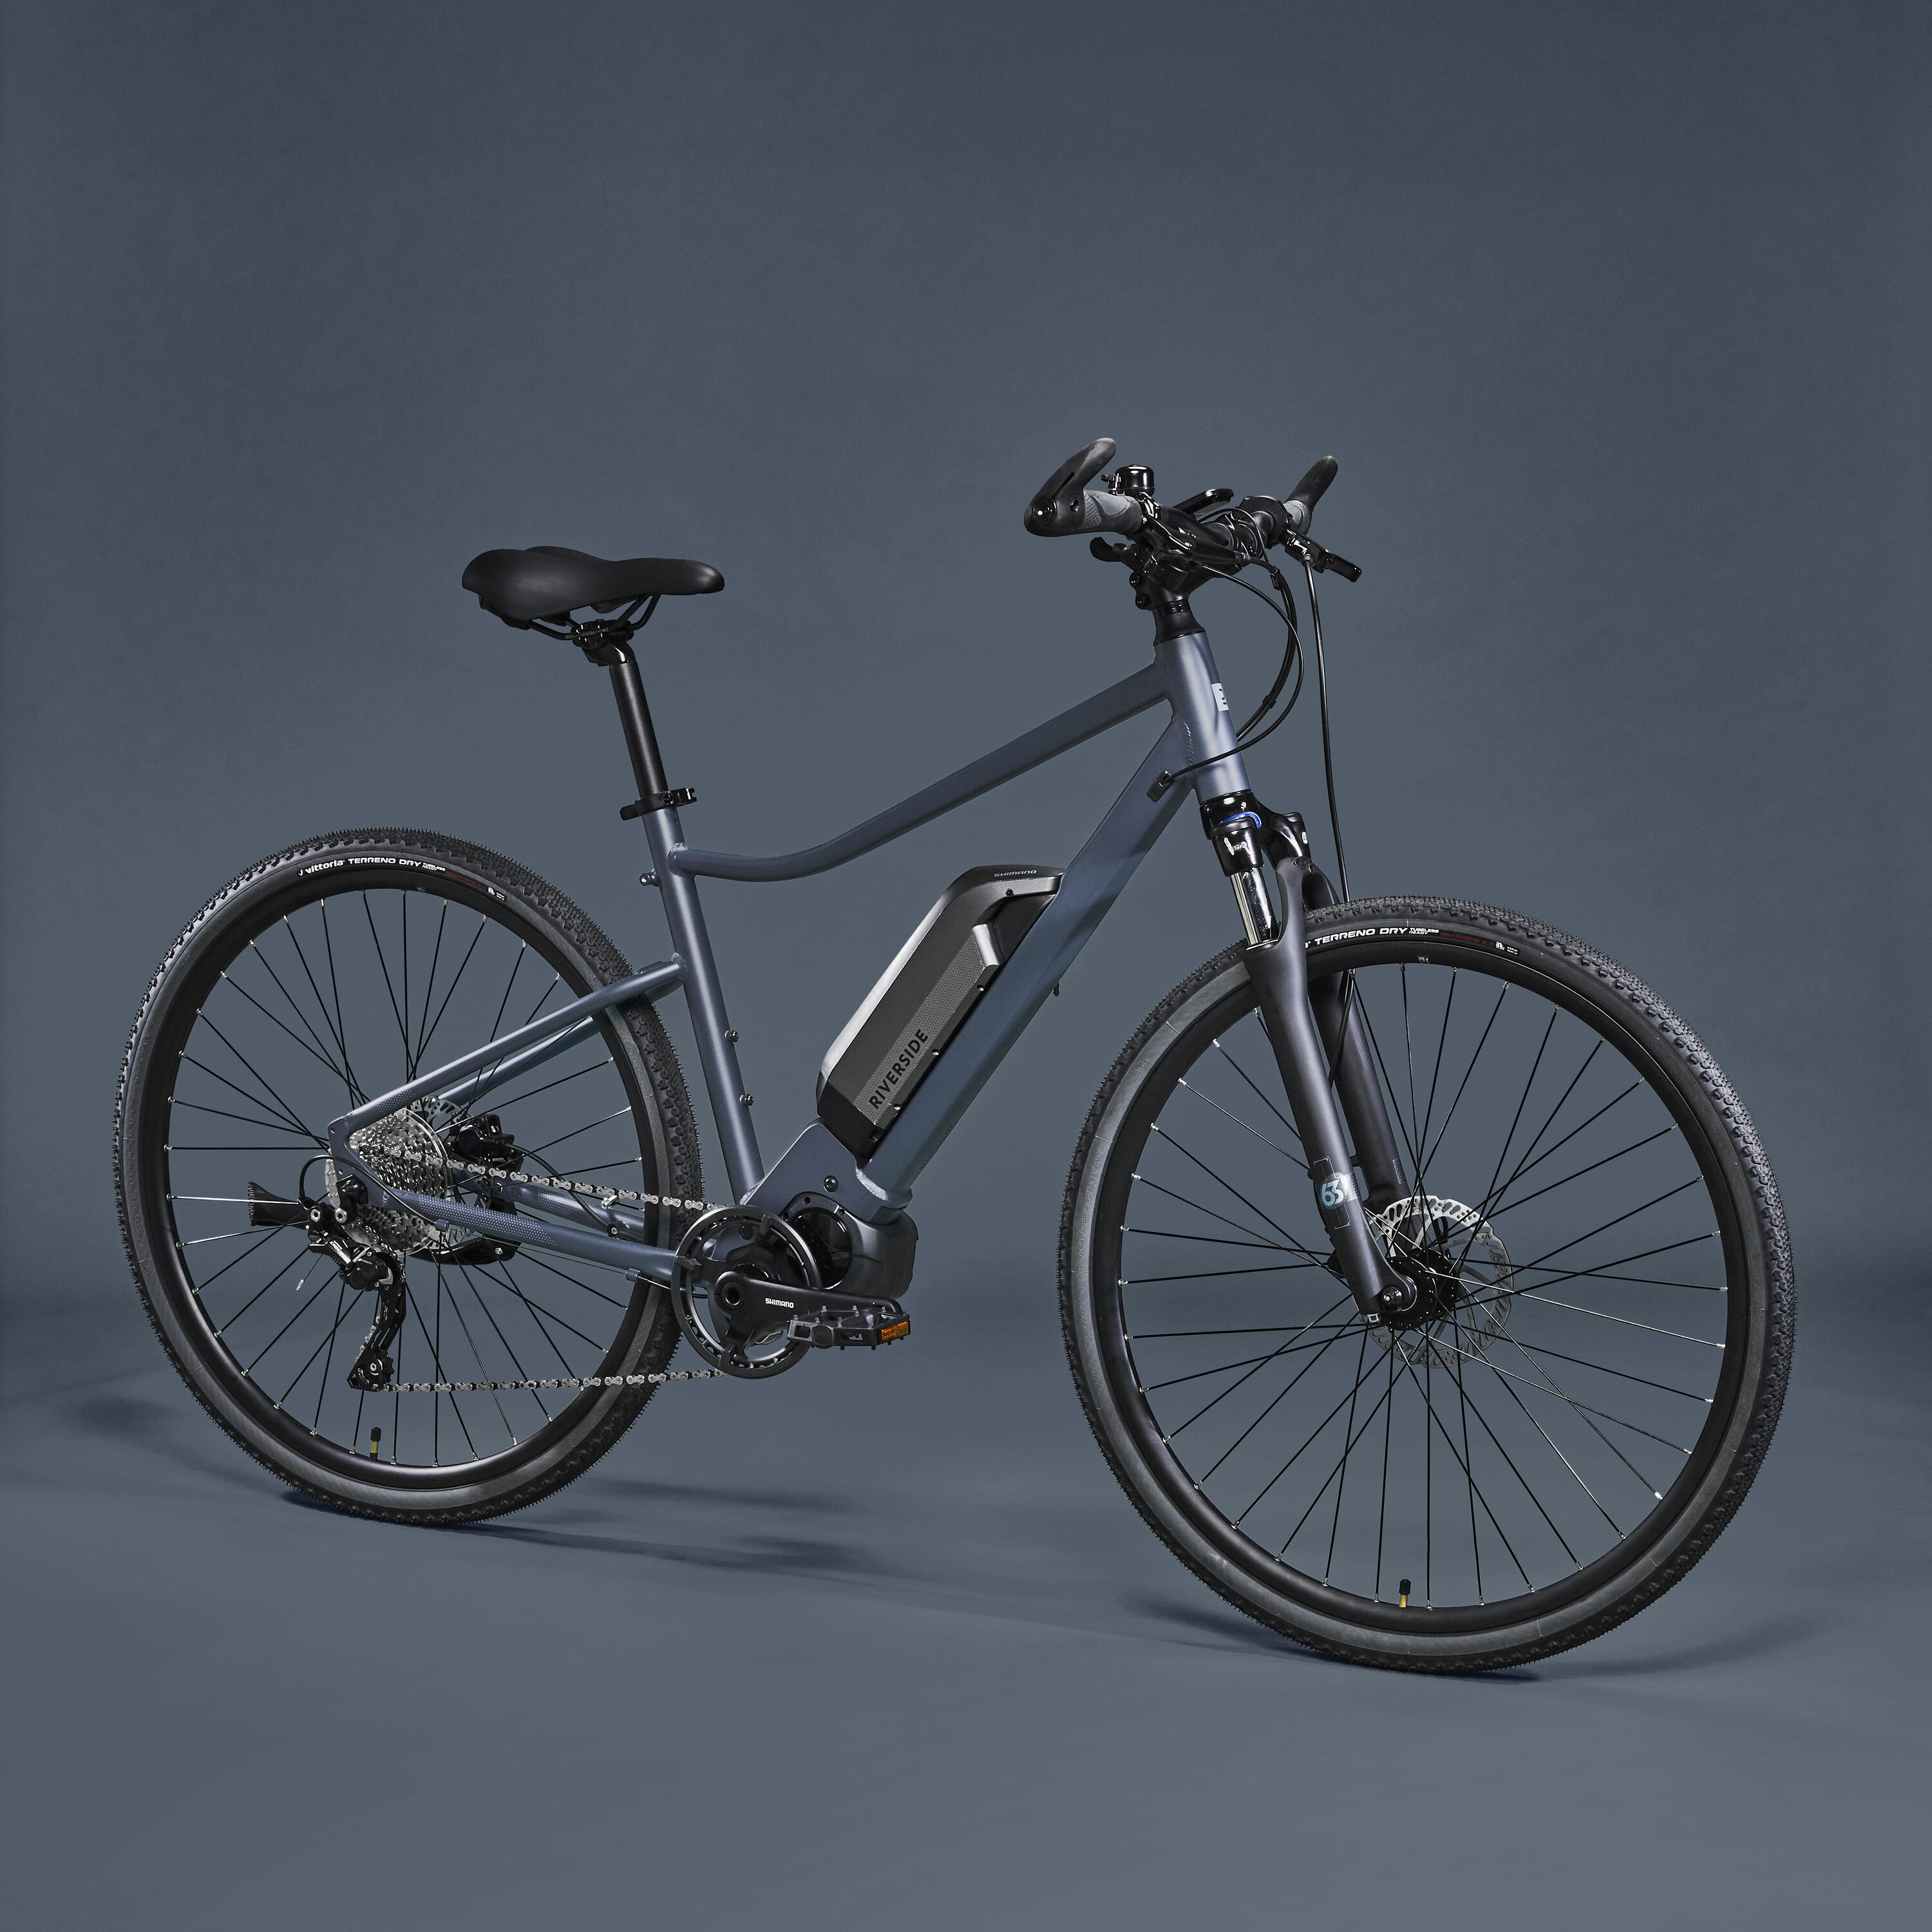 Shimano 60 Nm motor, long-distance electric hybrid bike, grey 4/23